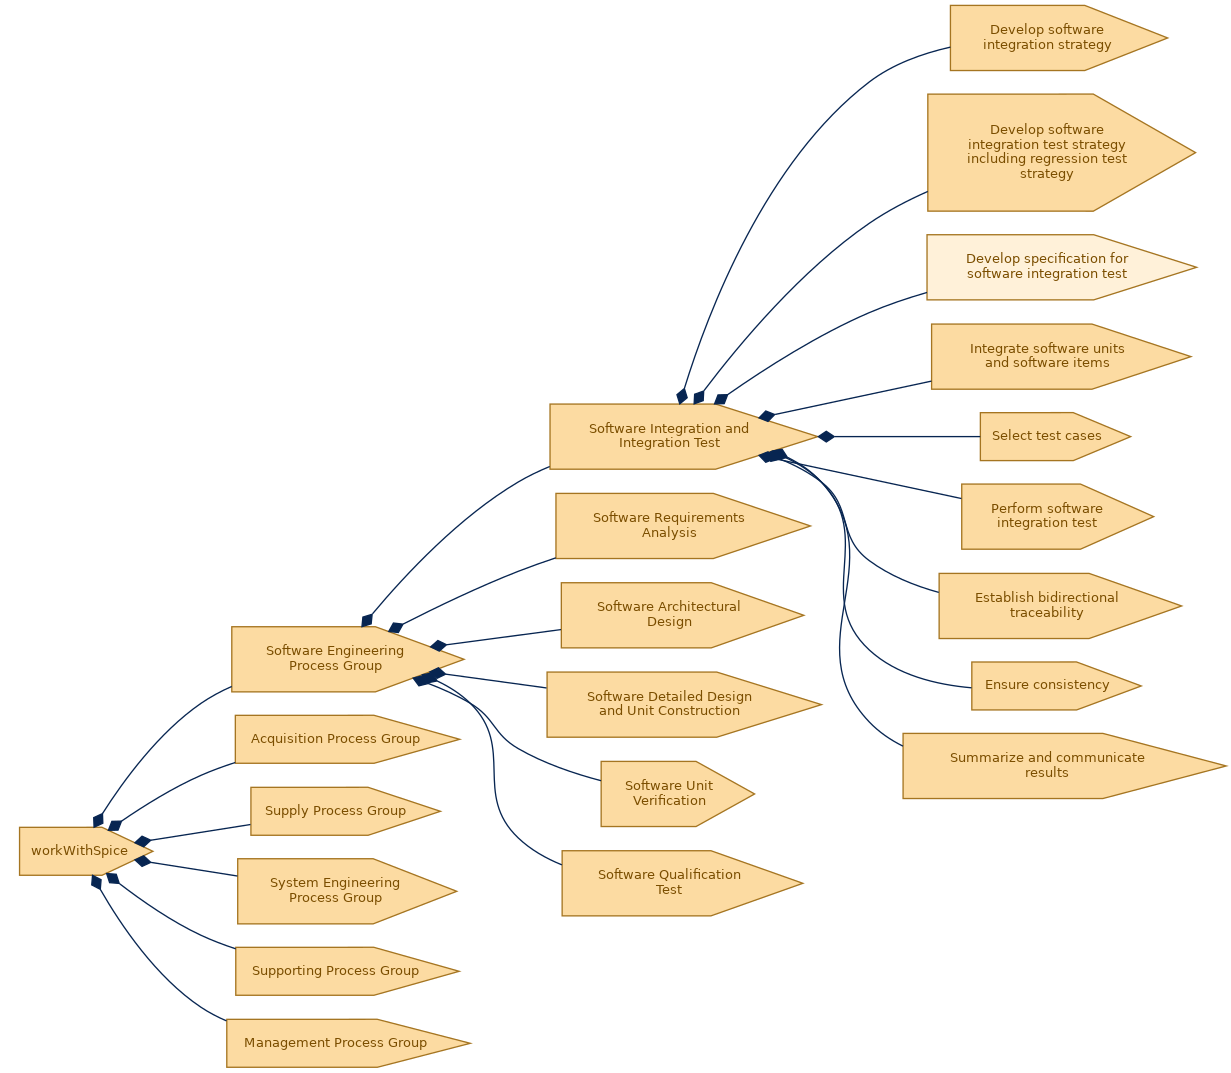 spem diagram of the activity breakdown: Develop specification for software integration test